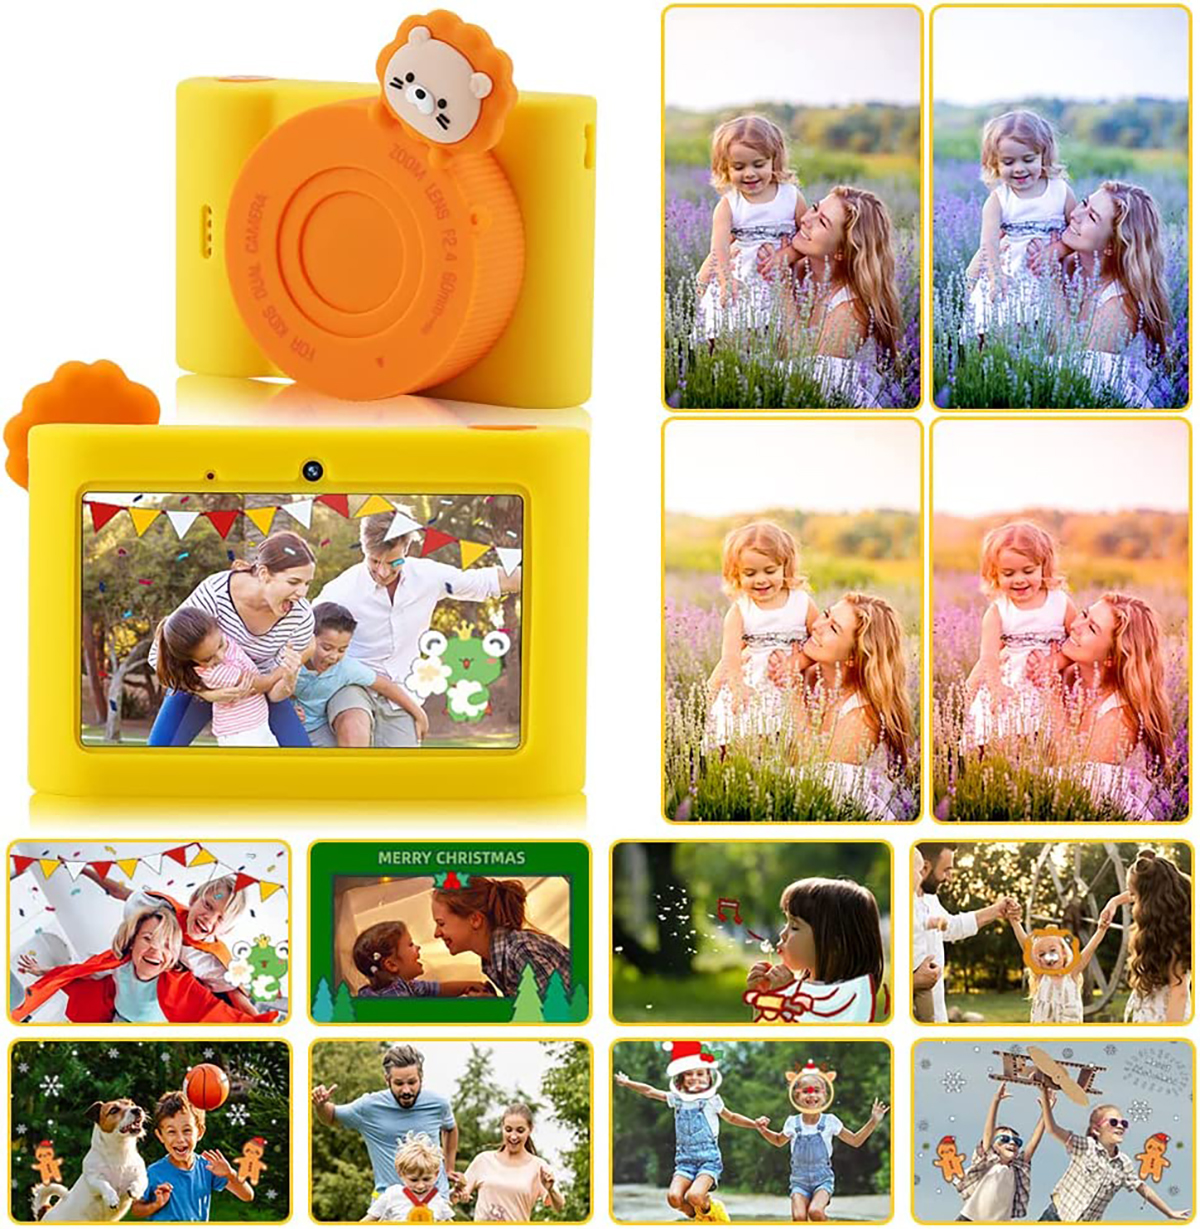 FINE LIFE PRO Kinderkamera,48MP,1080P,WiFi DigitalKamera Fotokamera,32GB SD-Karte Kinderkamera Gelb